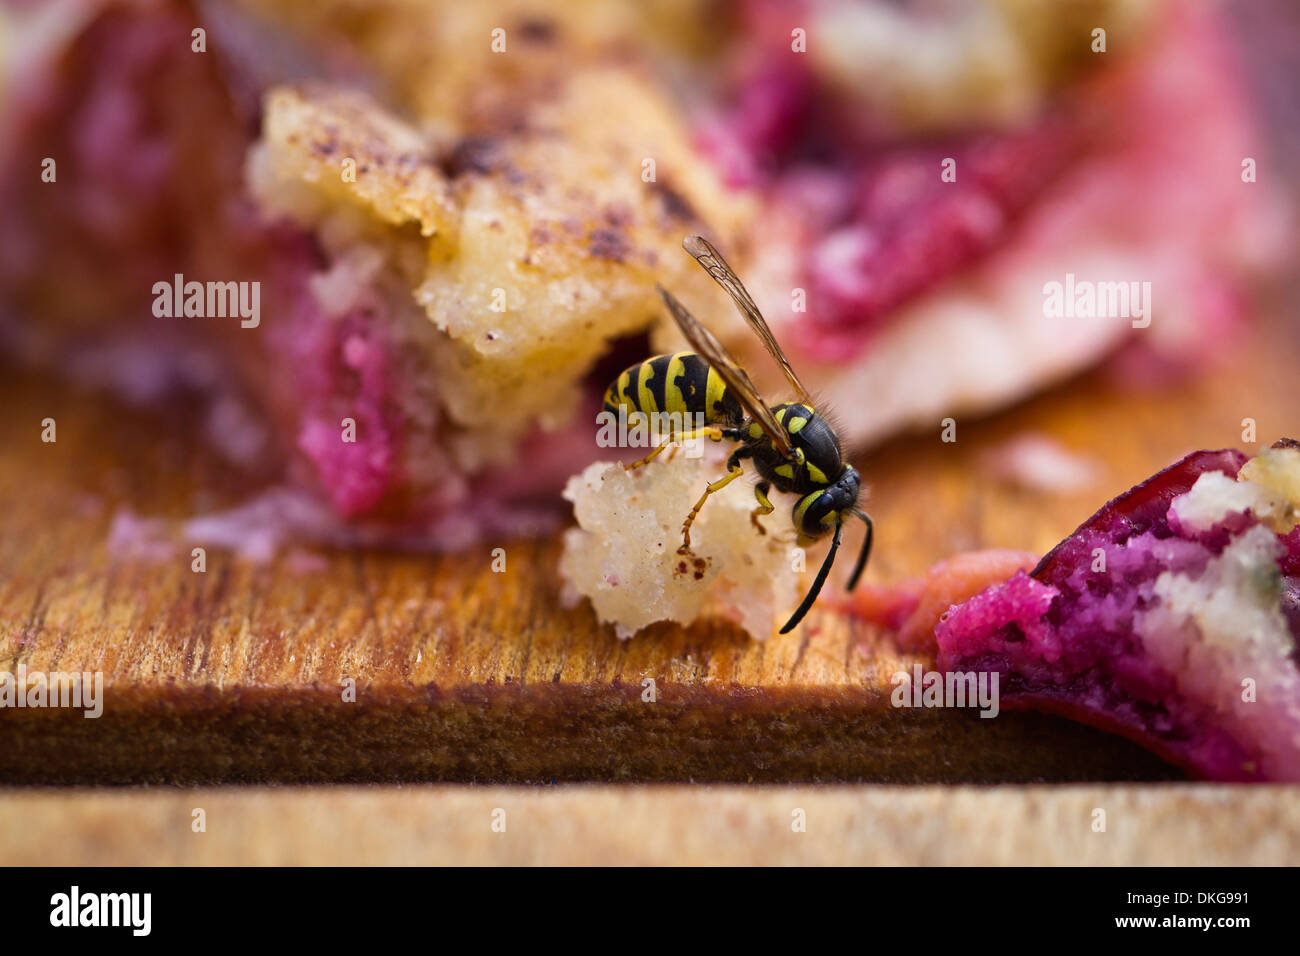 Wasp eating crumb of plum cake Stock Photo